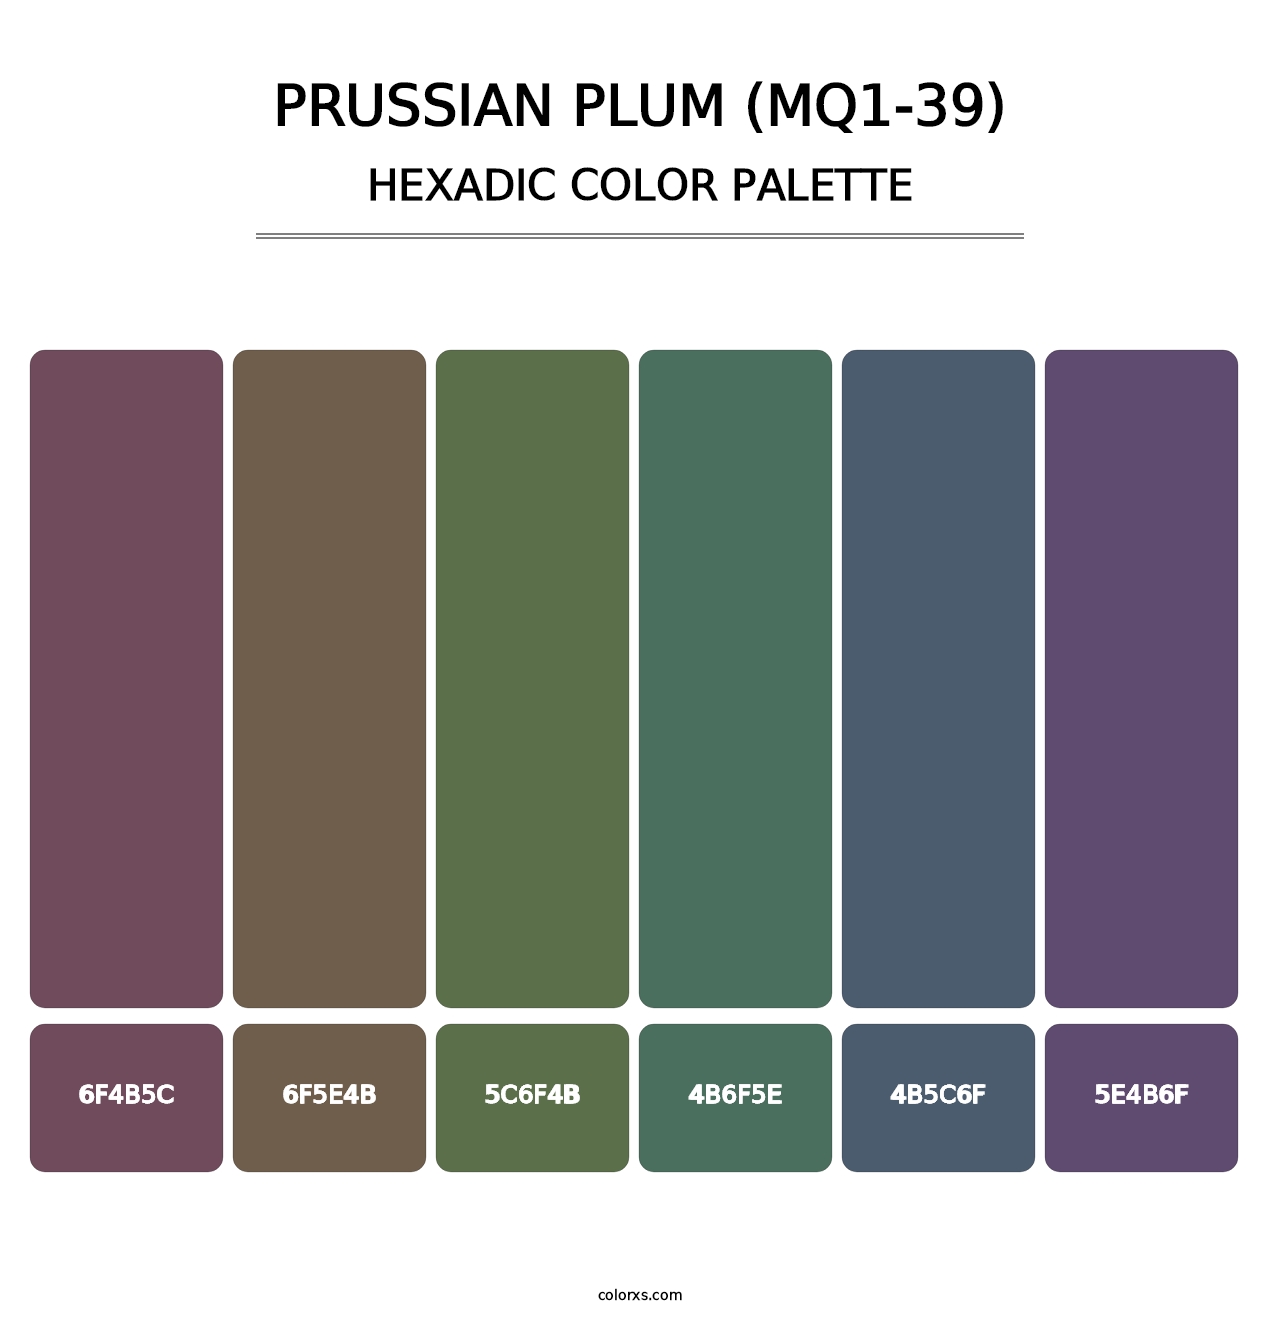 Prussian Plum (MQ1-39) - Hexadic Color Palette